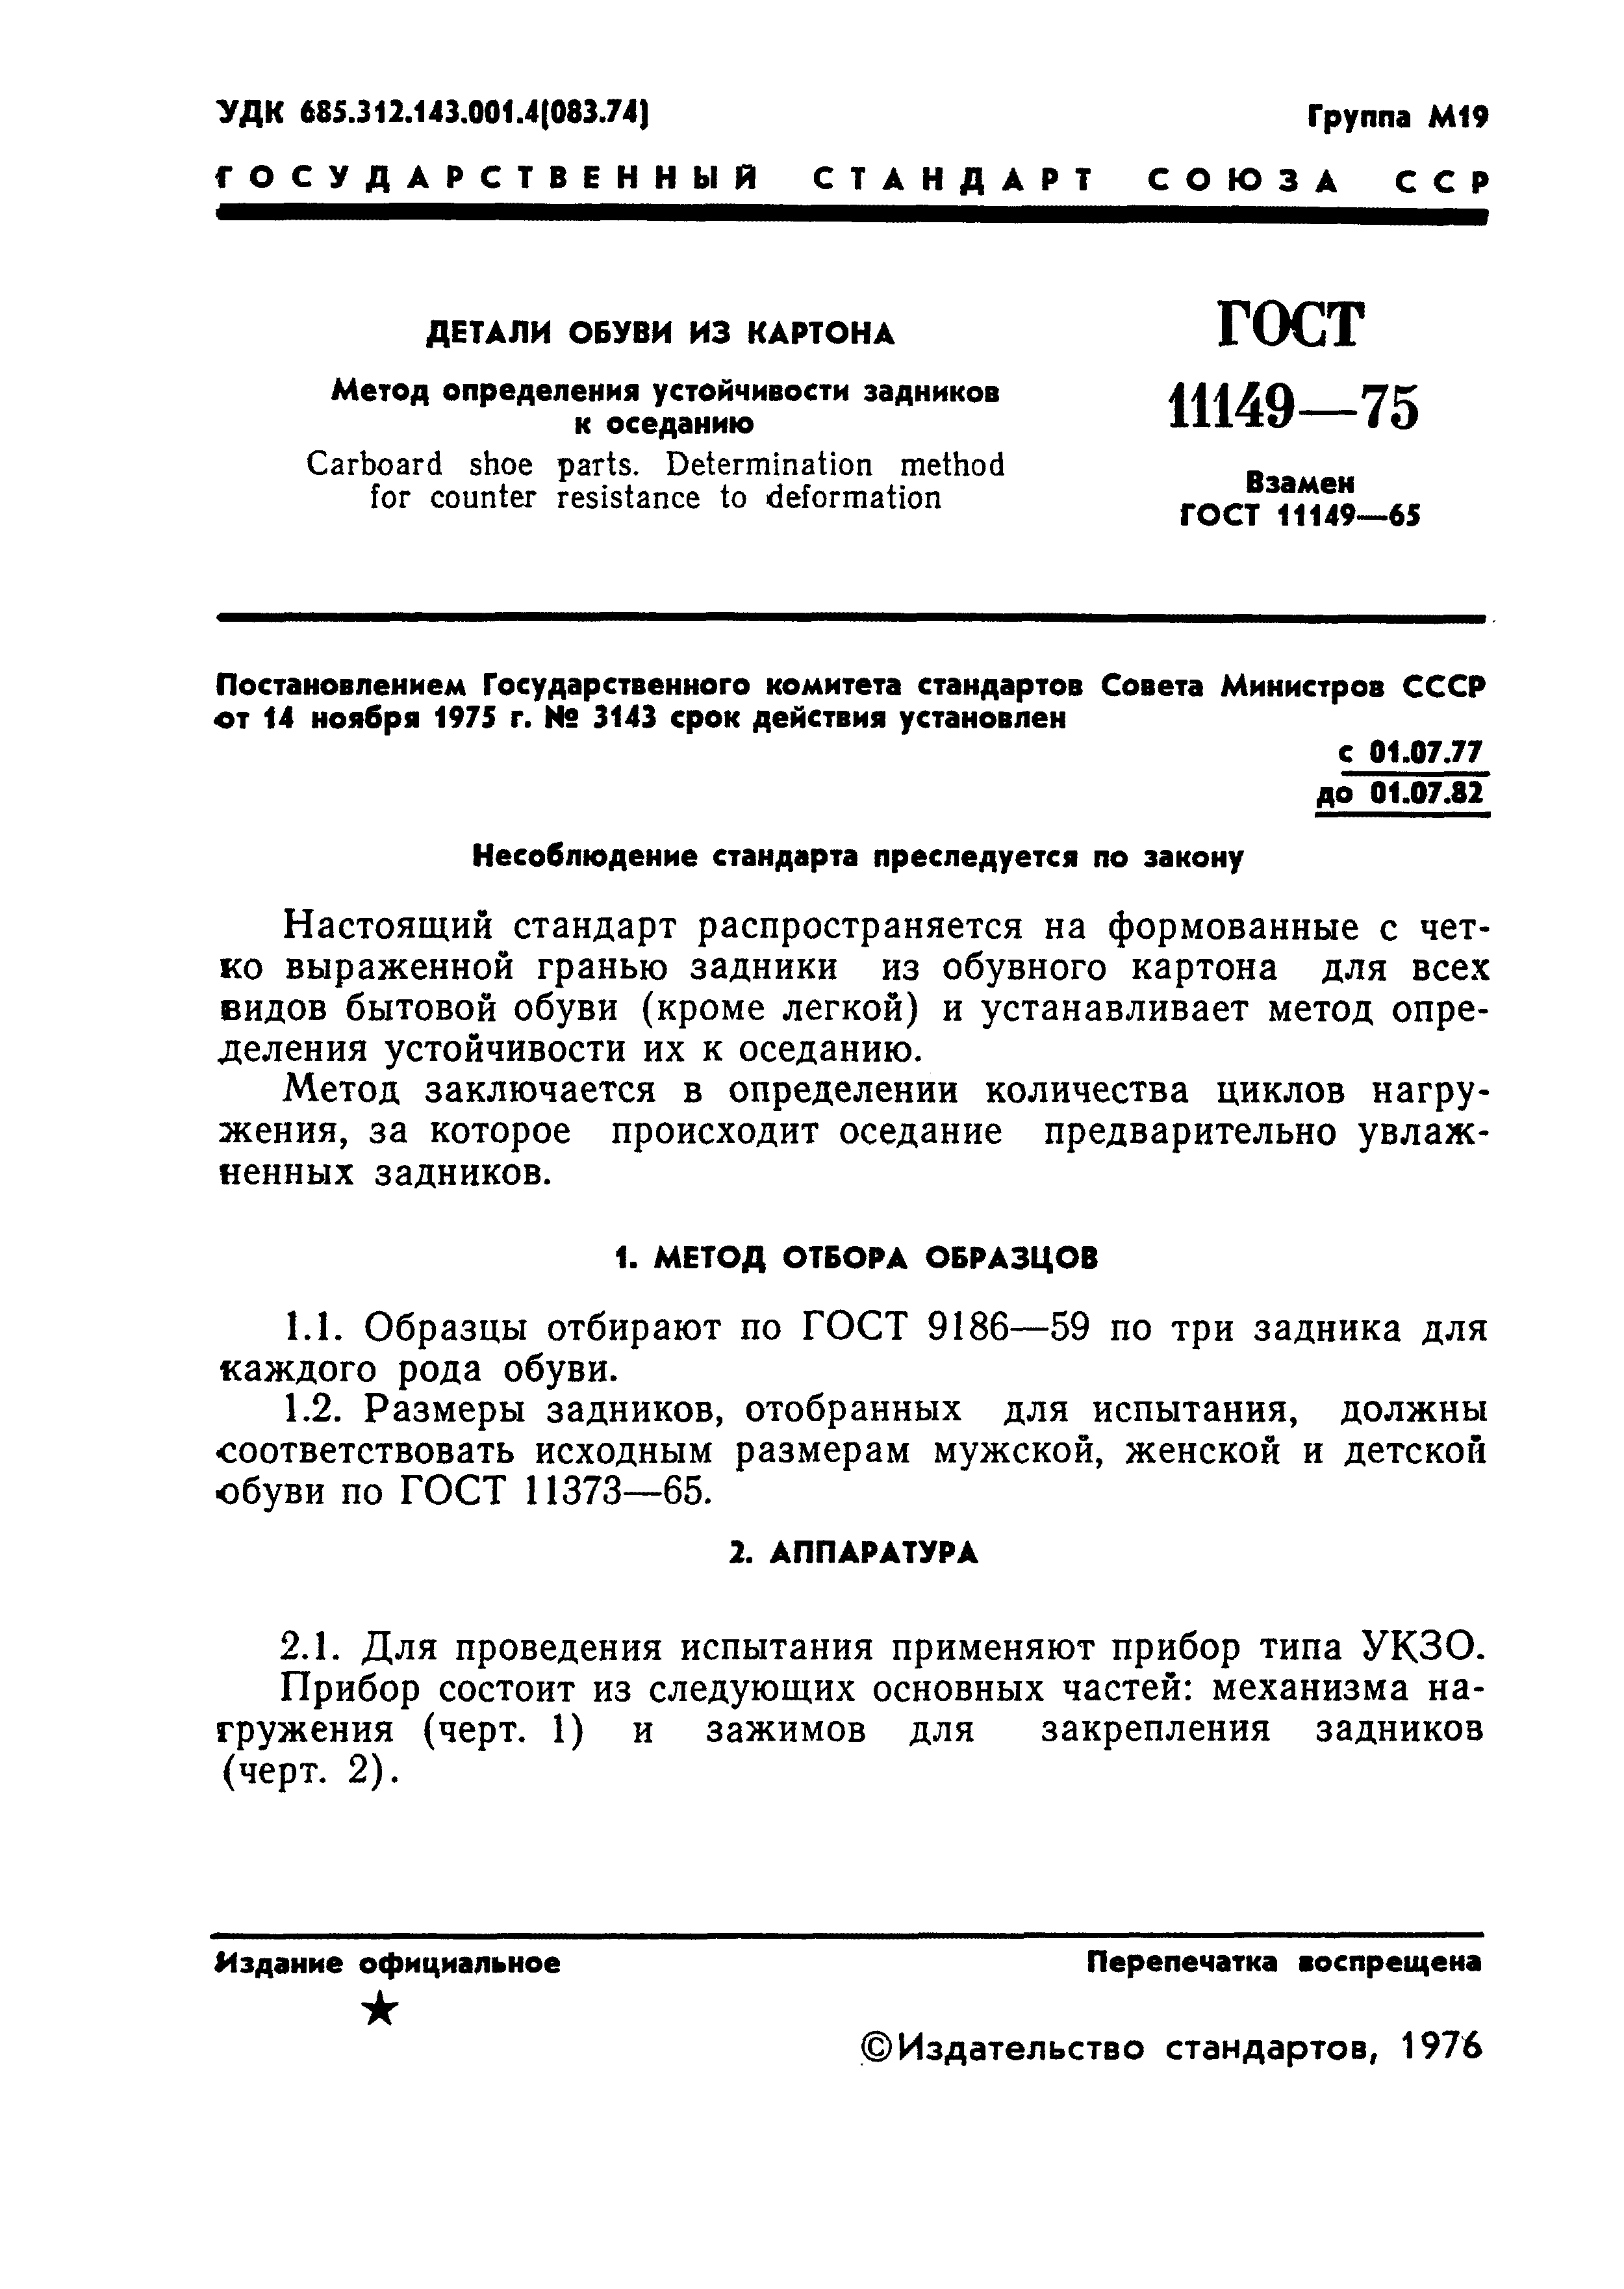 ГОСТ 11149-75